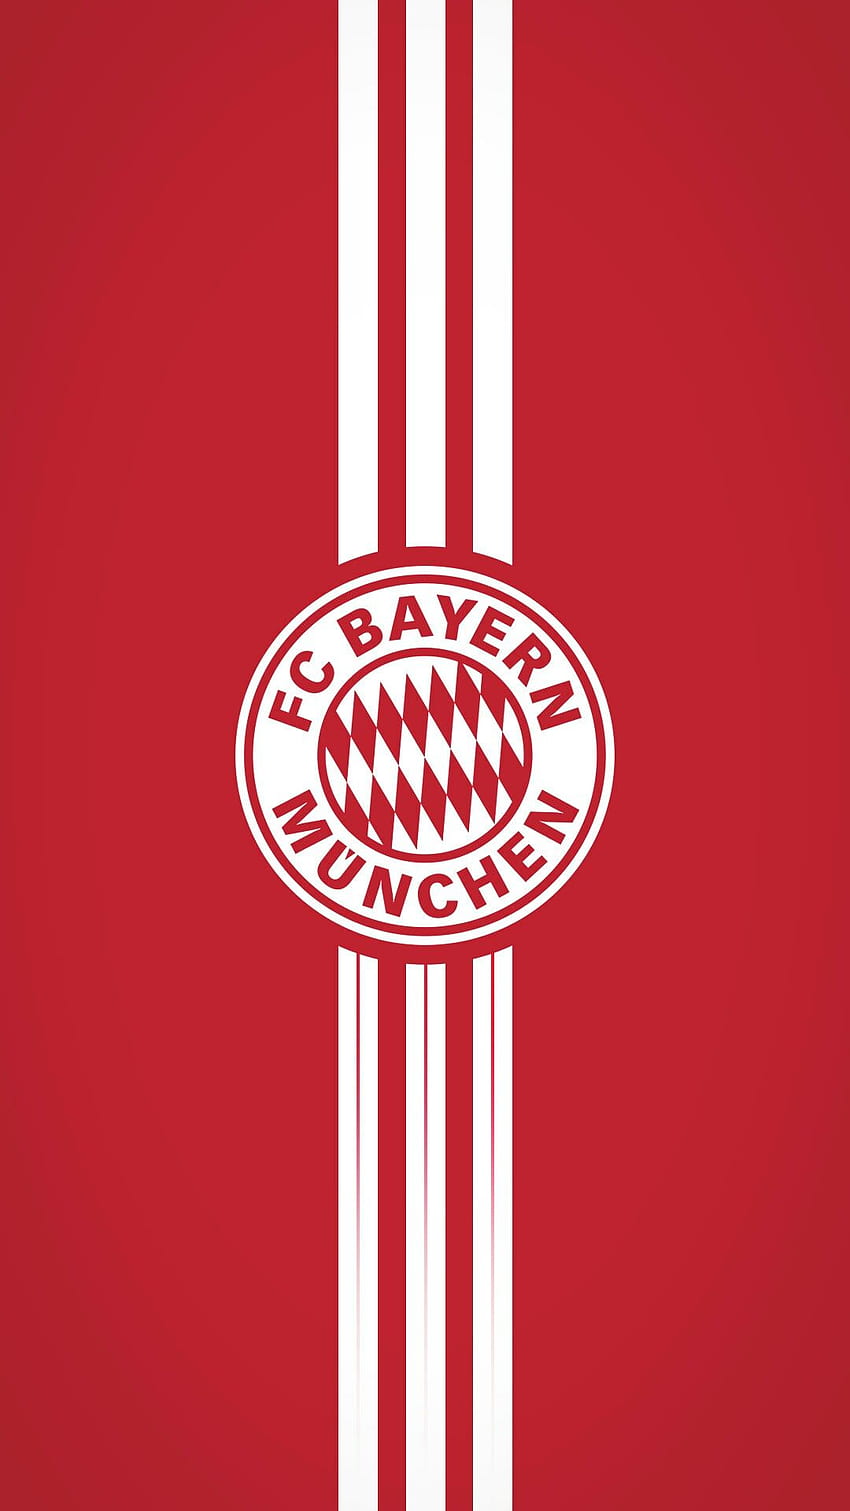 FC Bayern Munchen - Hebat, Bayern Munich wallpaper ponsel HD